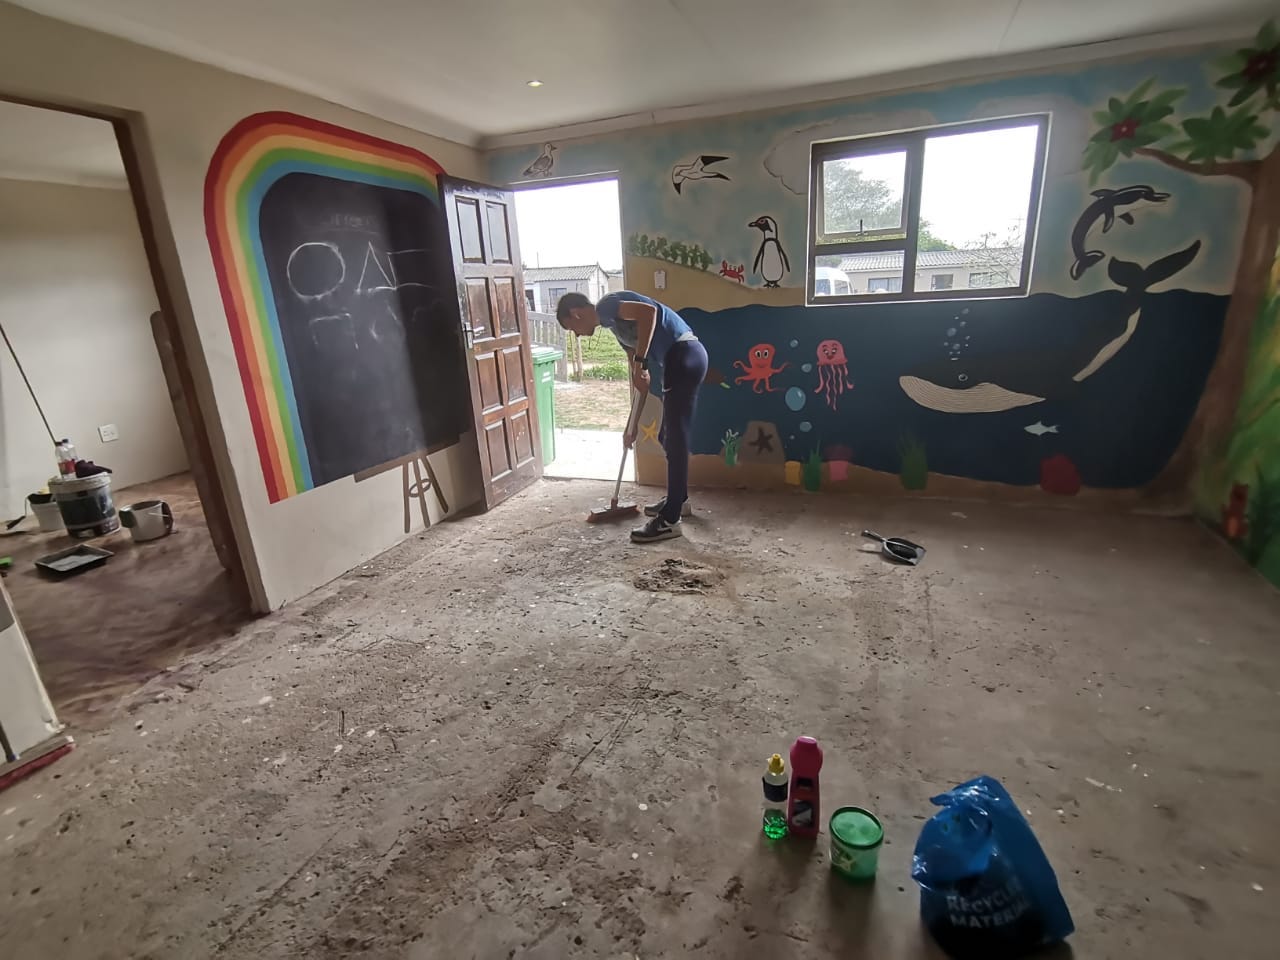 Rainbow Day Care murals and new floor in progress